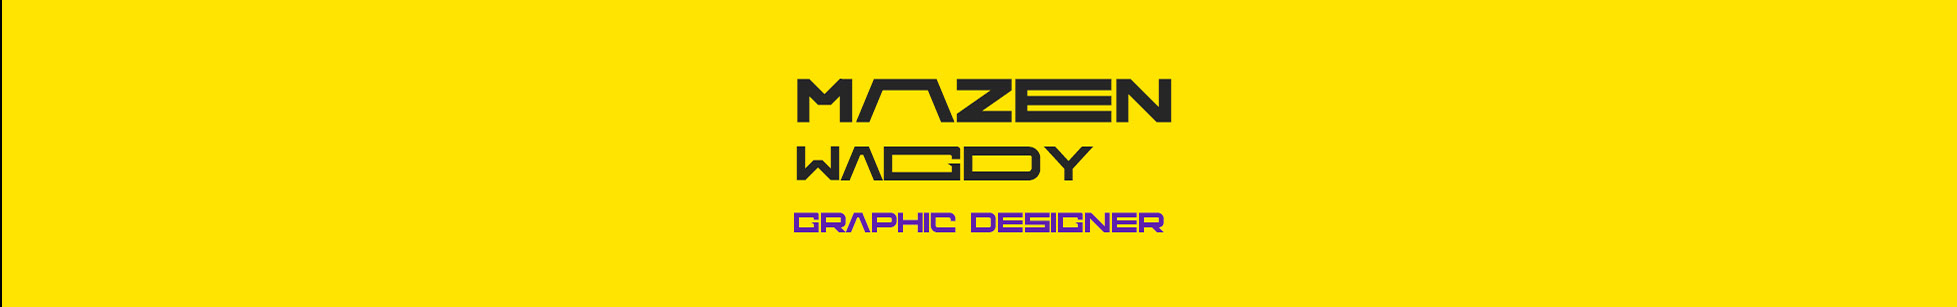 Mazen Wagdy's profile banner